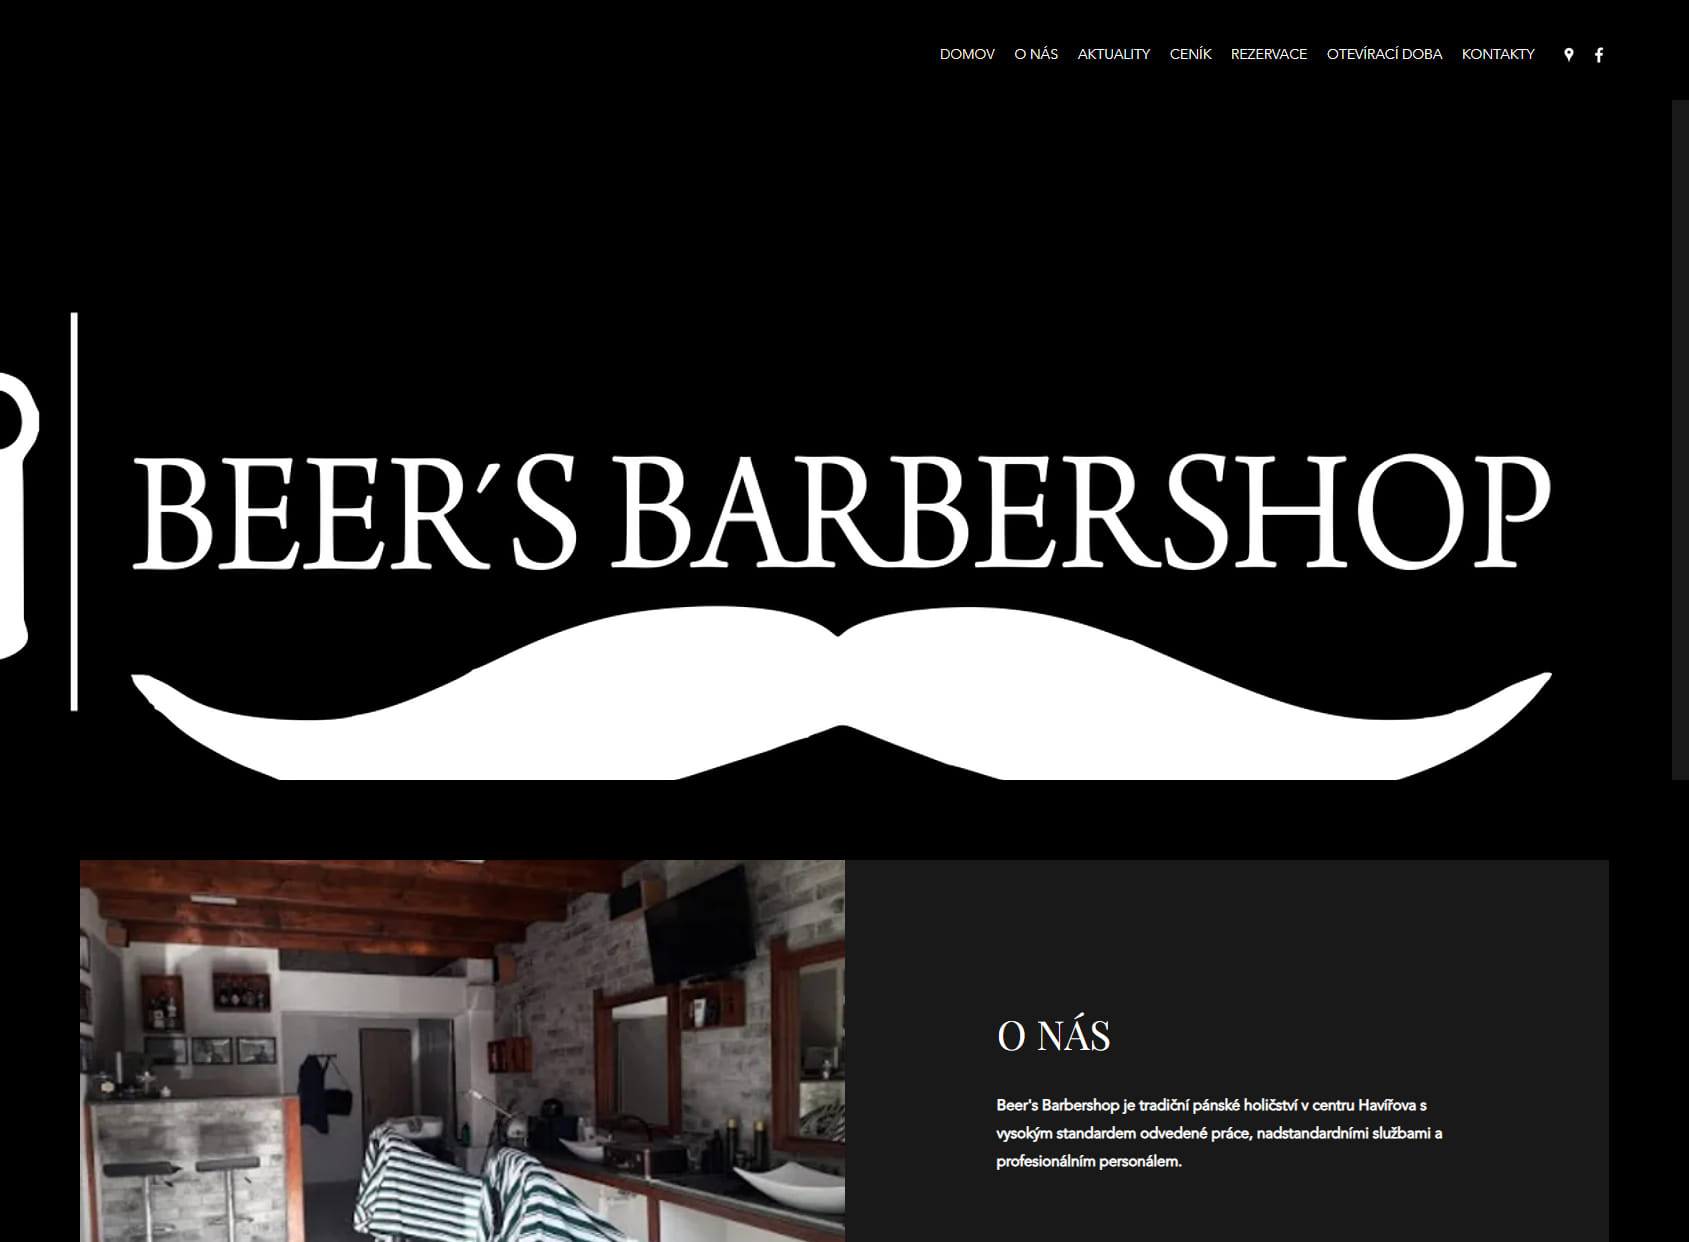 Beer's Barbershop